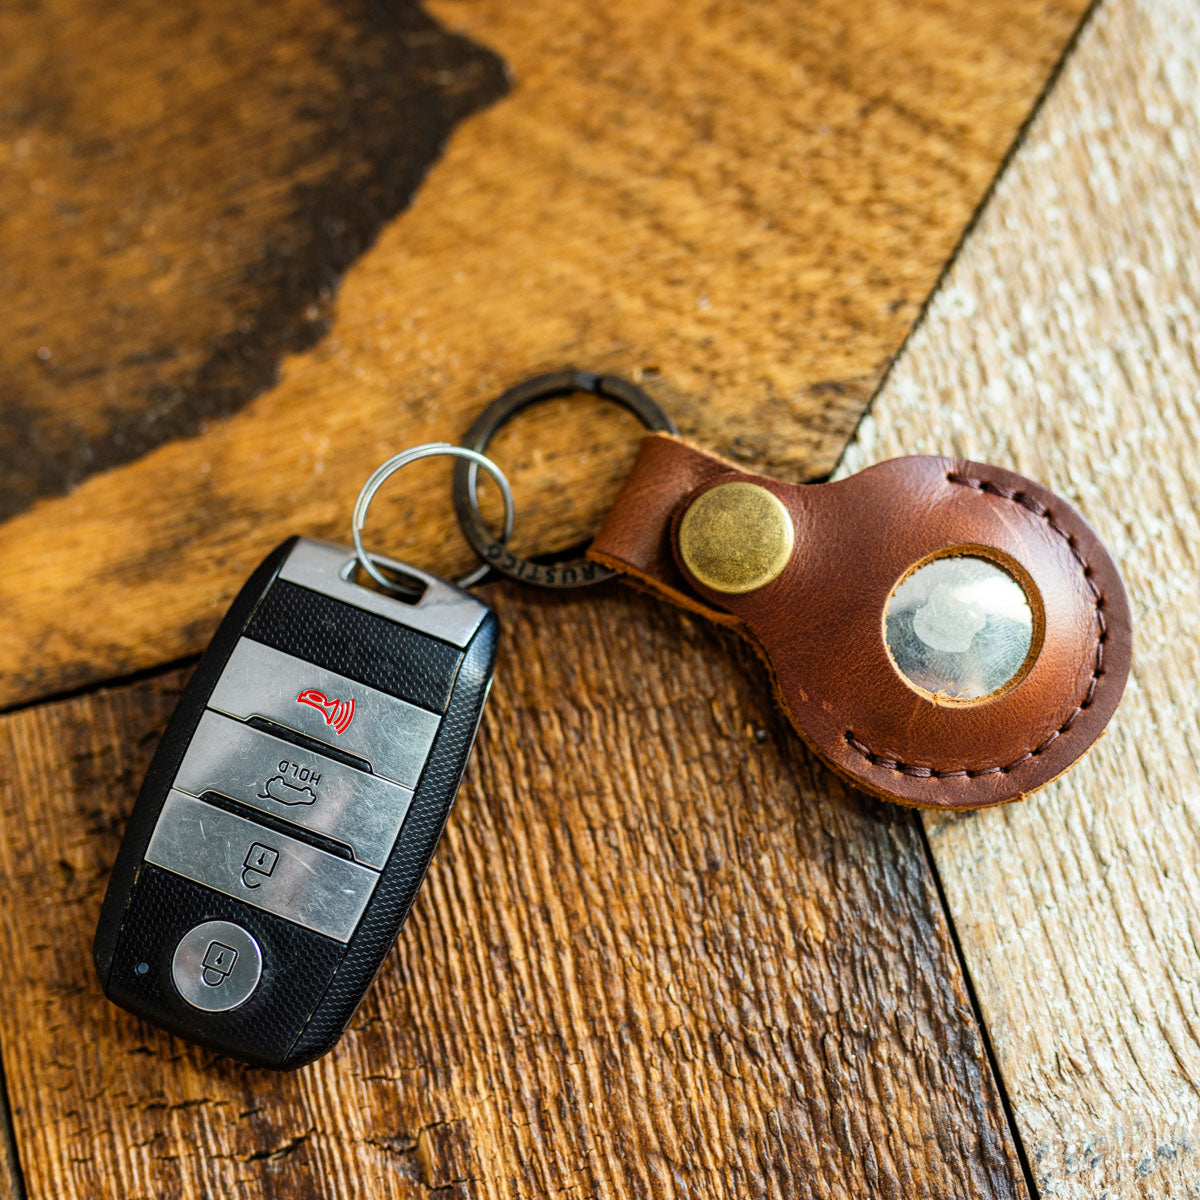 Buy Mens Leather Car Key Case Card Id Holder Wallet Key Ring